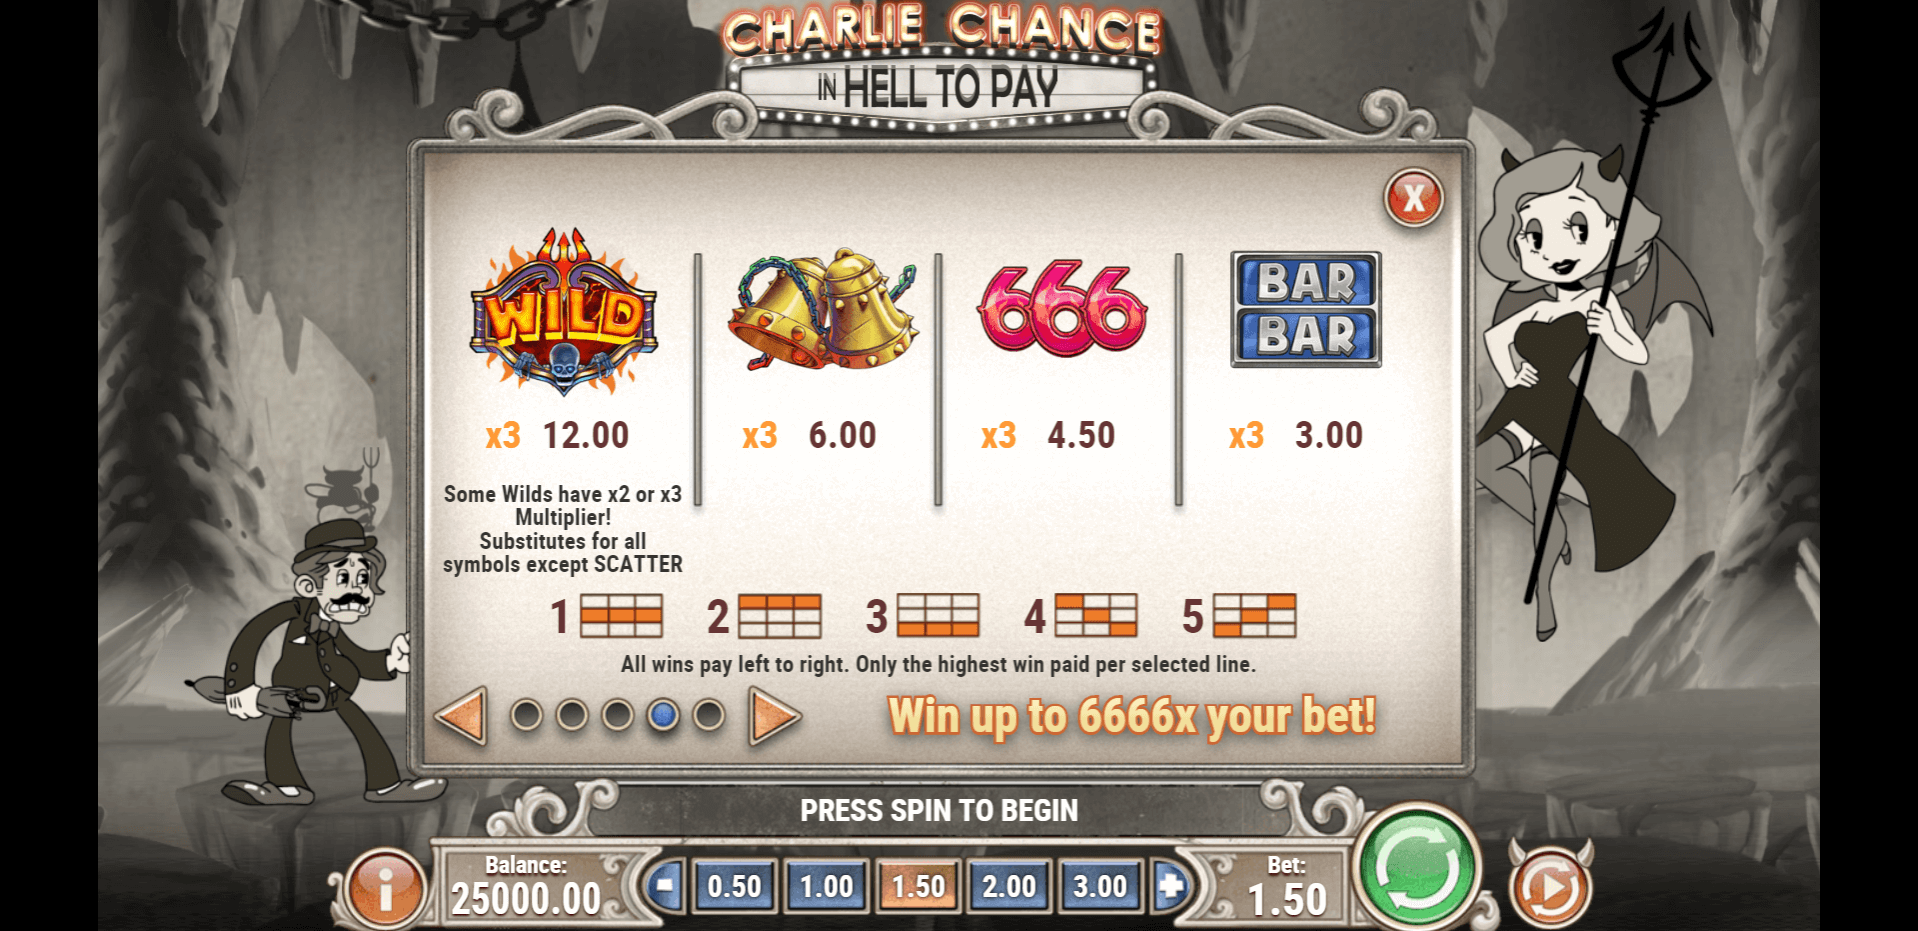 charlie chance slot machine detail image 1